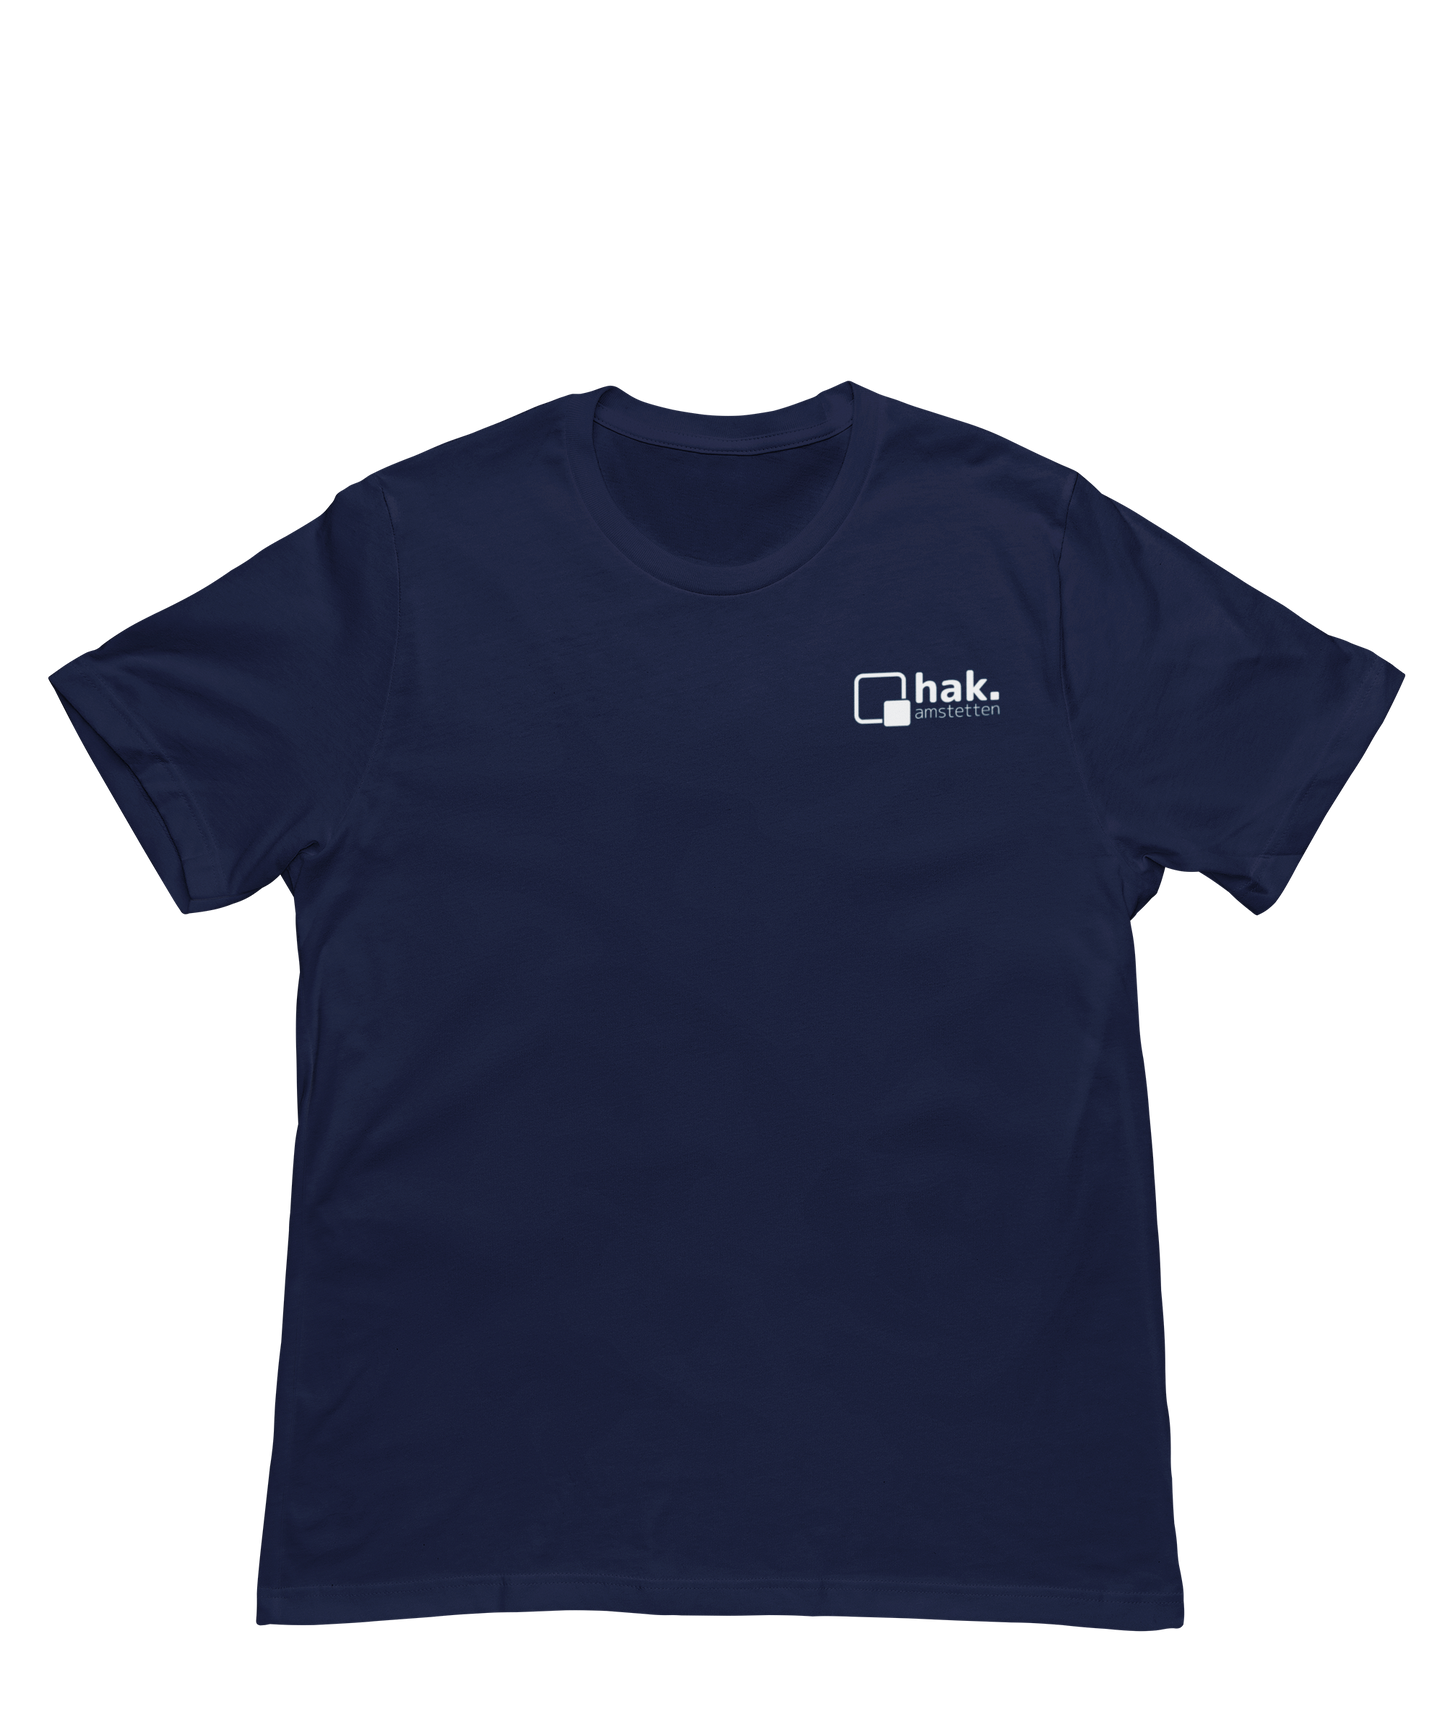 BHAK/BHAS Amstetten - Organic T-Shirt - HAK Classic (navy)